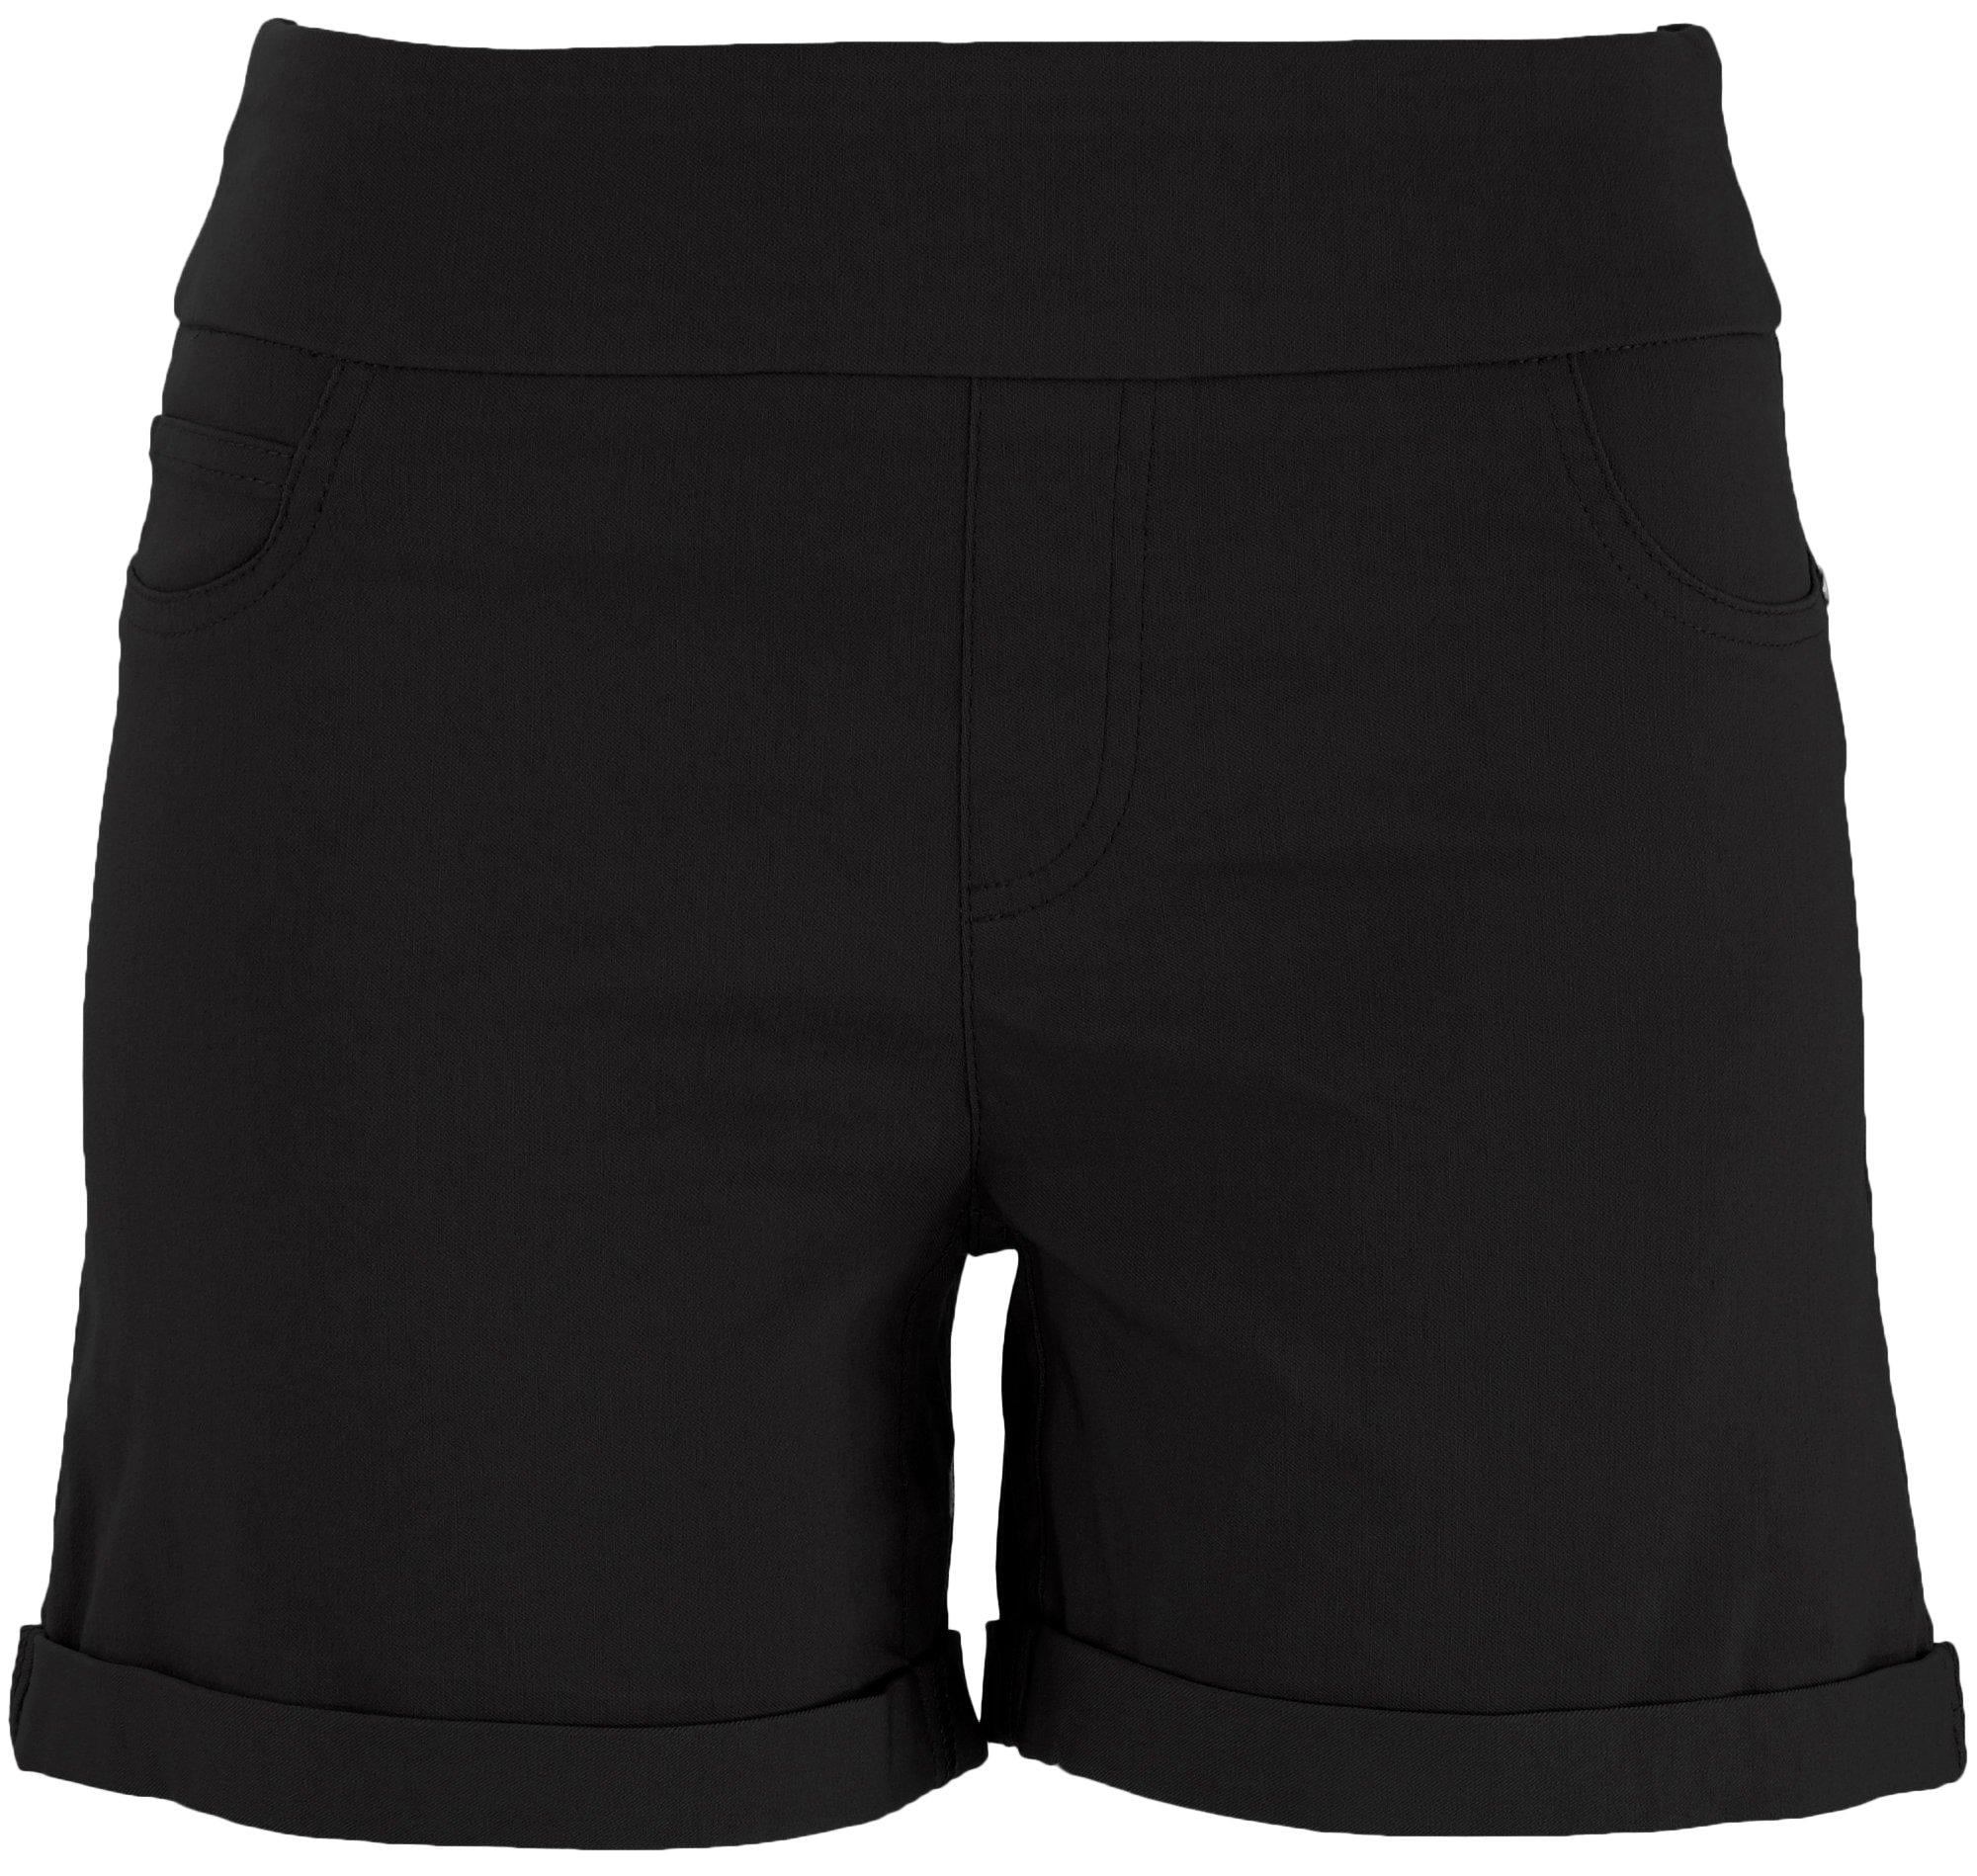 Counterparts Petite Super Stretch Shorts 10P Black - Walmart.com